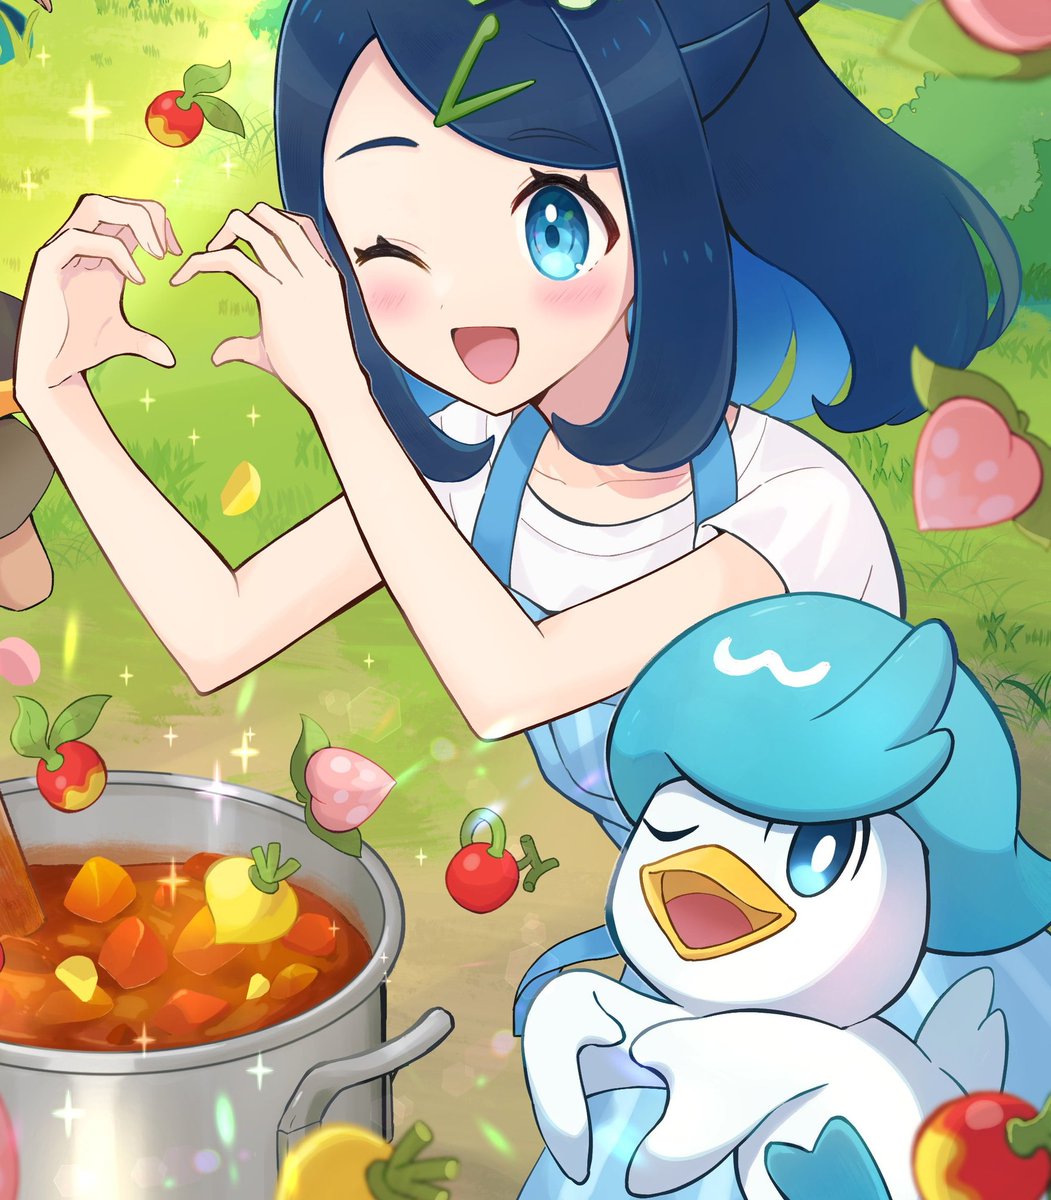 It's time to prepare food in kawaii style 🍲😀
Cute birdy and cute girl 😍 #Pokemon #PokemonScarletViolet #PokemonHorizons #fanart